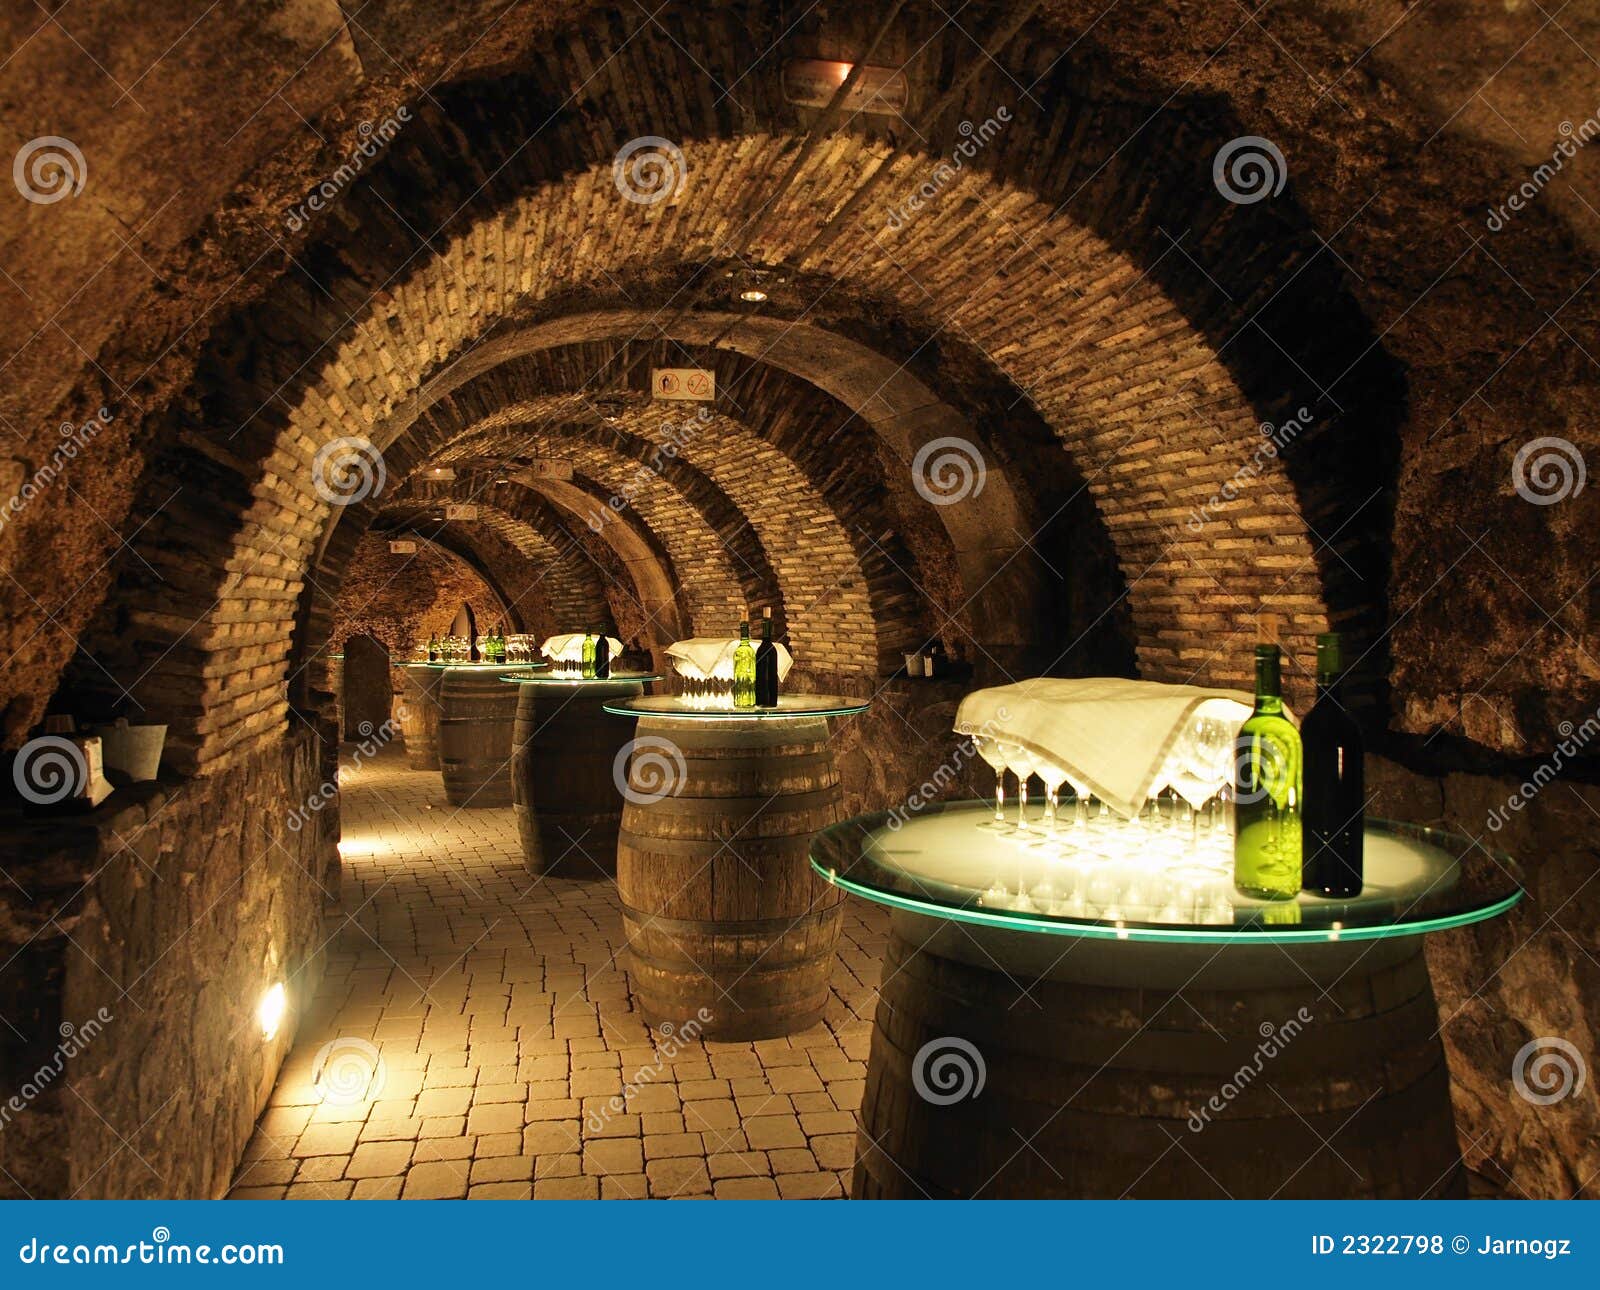 wine barrels in the old cellar